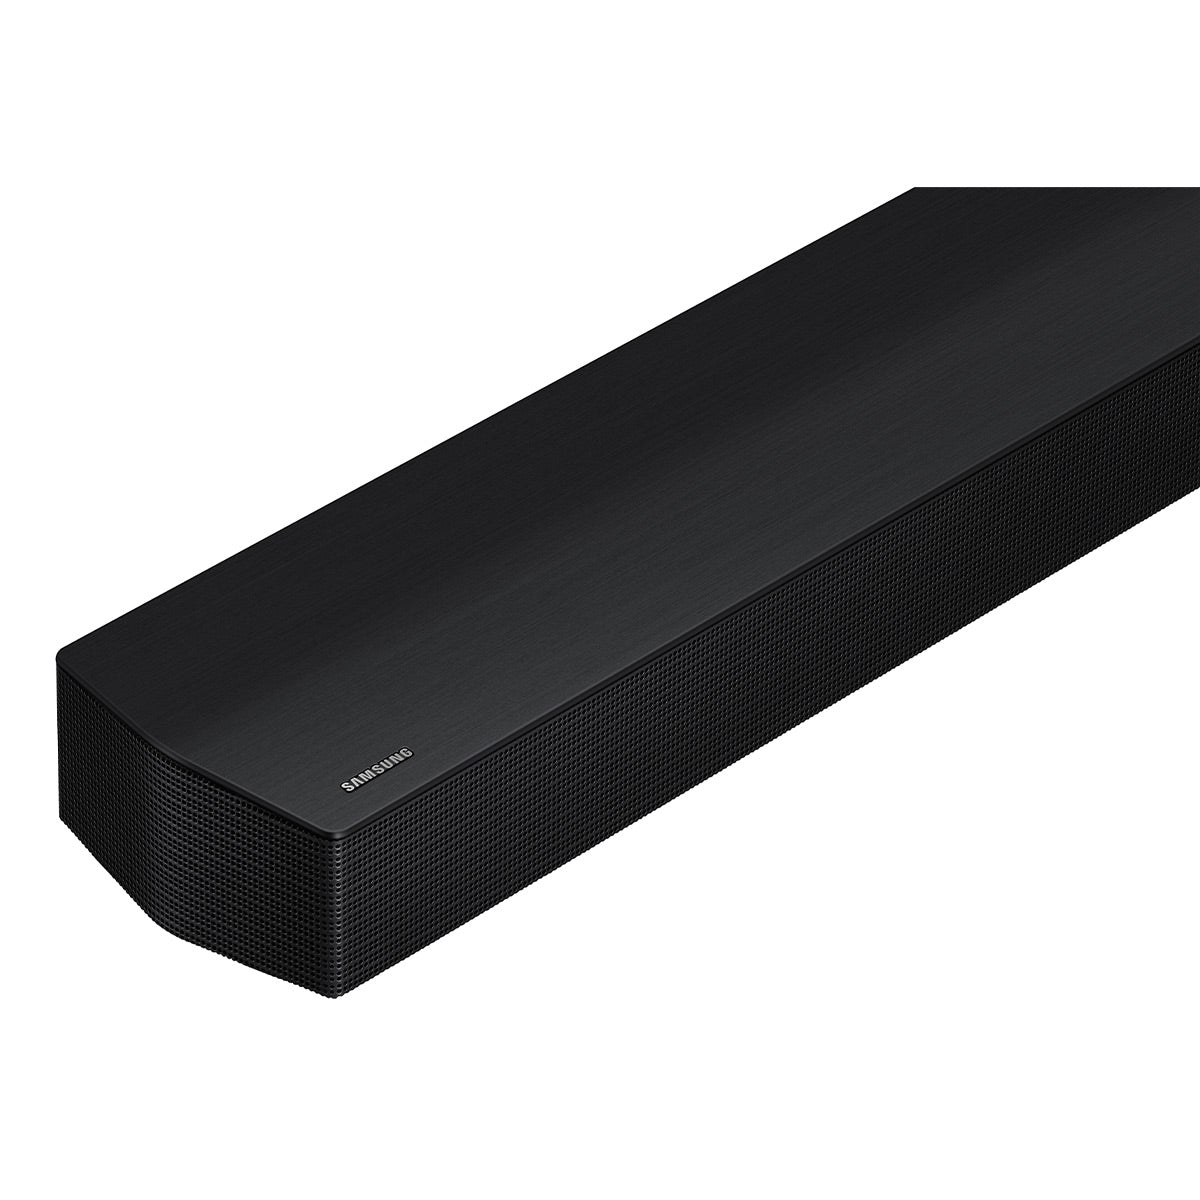 Samsung HW-B750D 5.1-Channel Soundbar with Wireless Subwoofer (Black)